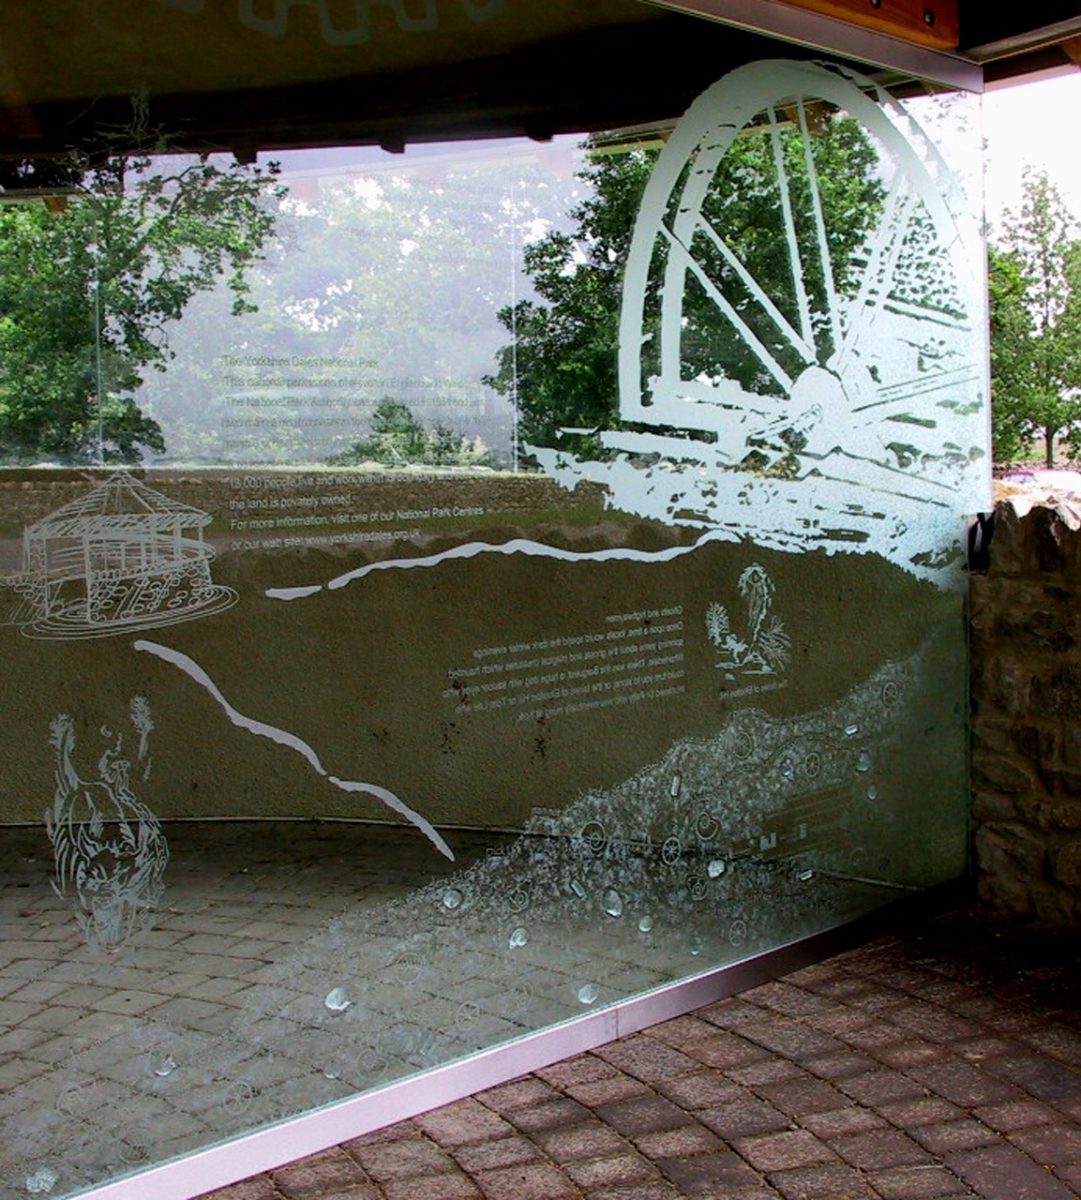 Inside grassington etched glass